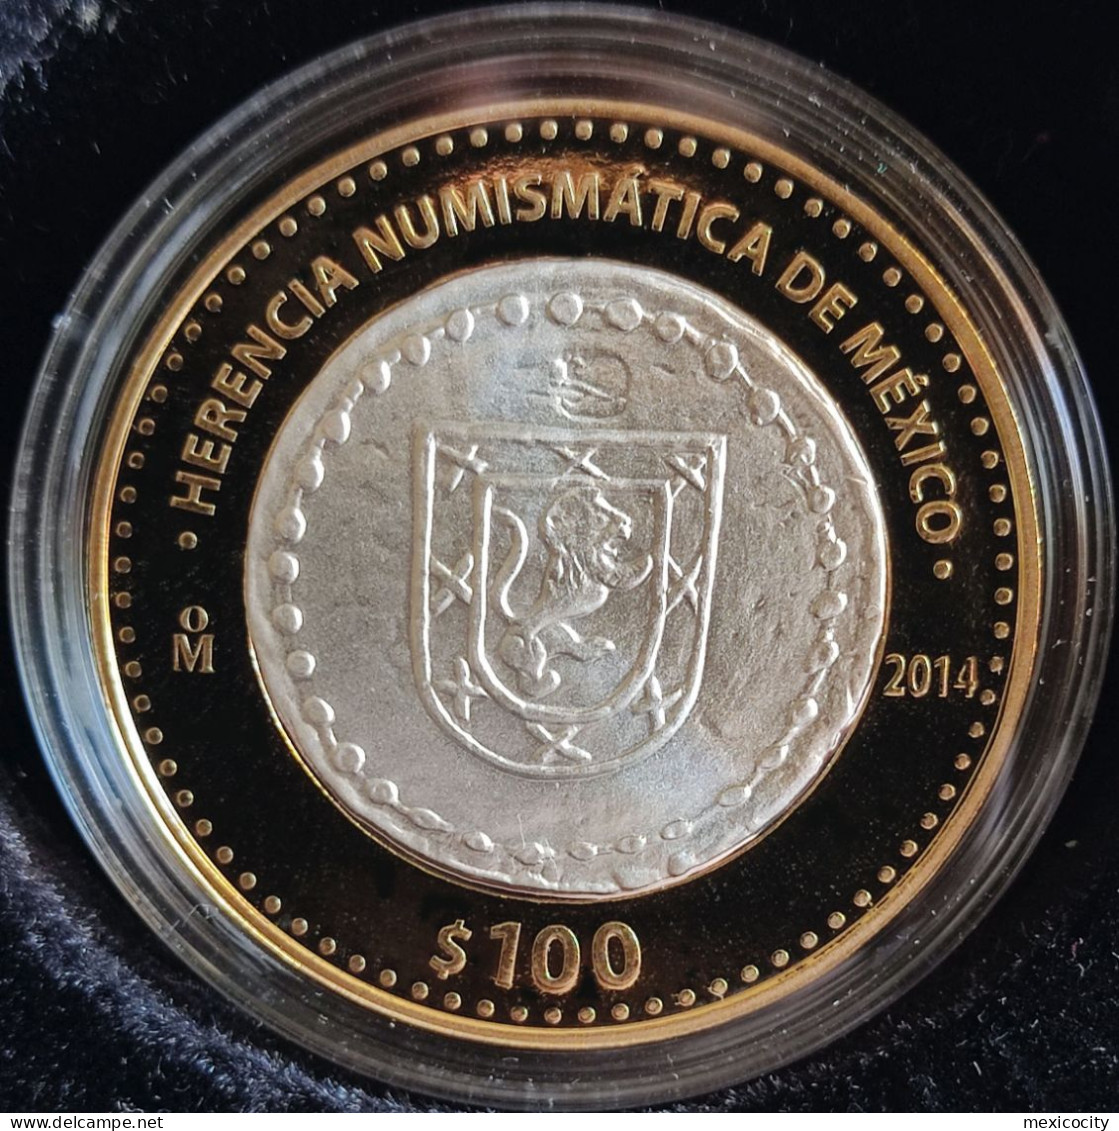 MEXICO 2014 $100 "OAXACA 1812 8 Reales Prov. Coin" Design SILVER Core Num. Heritage Series Proof Edition - Mexico